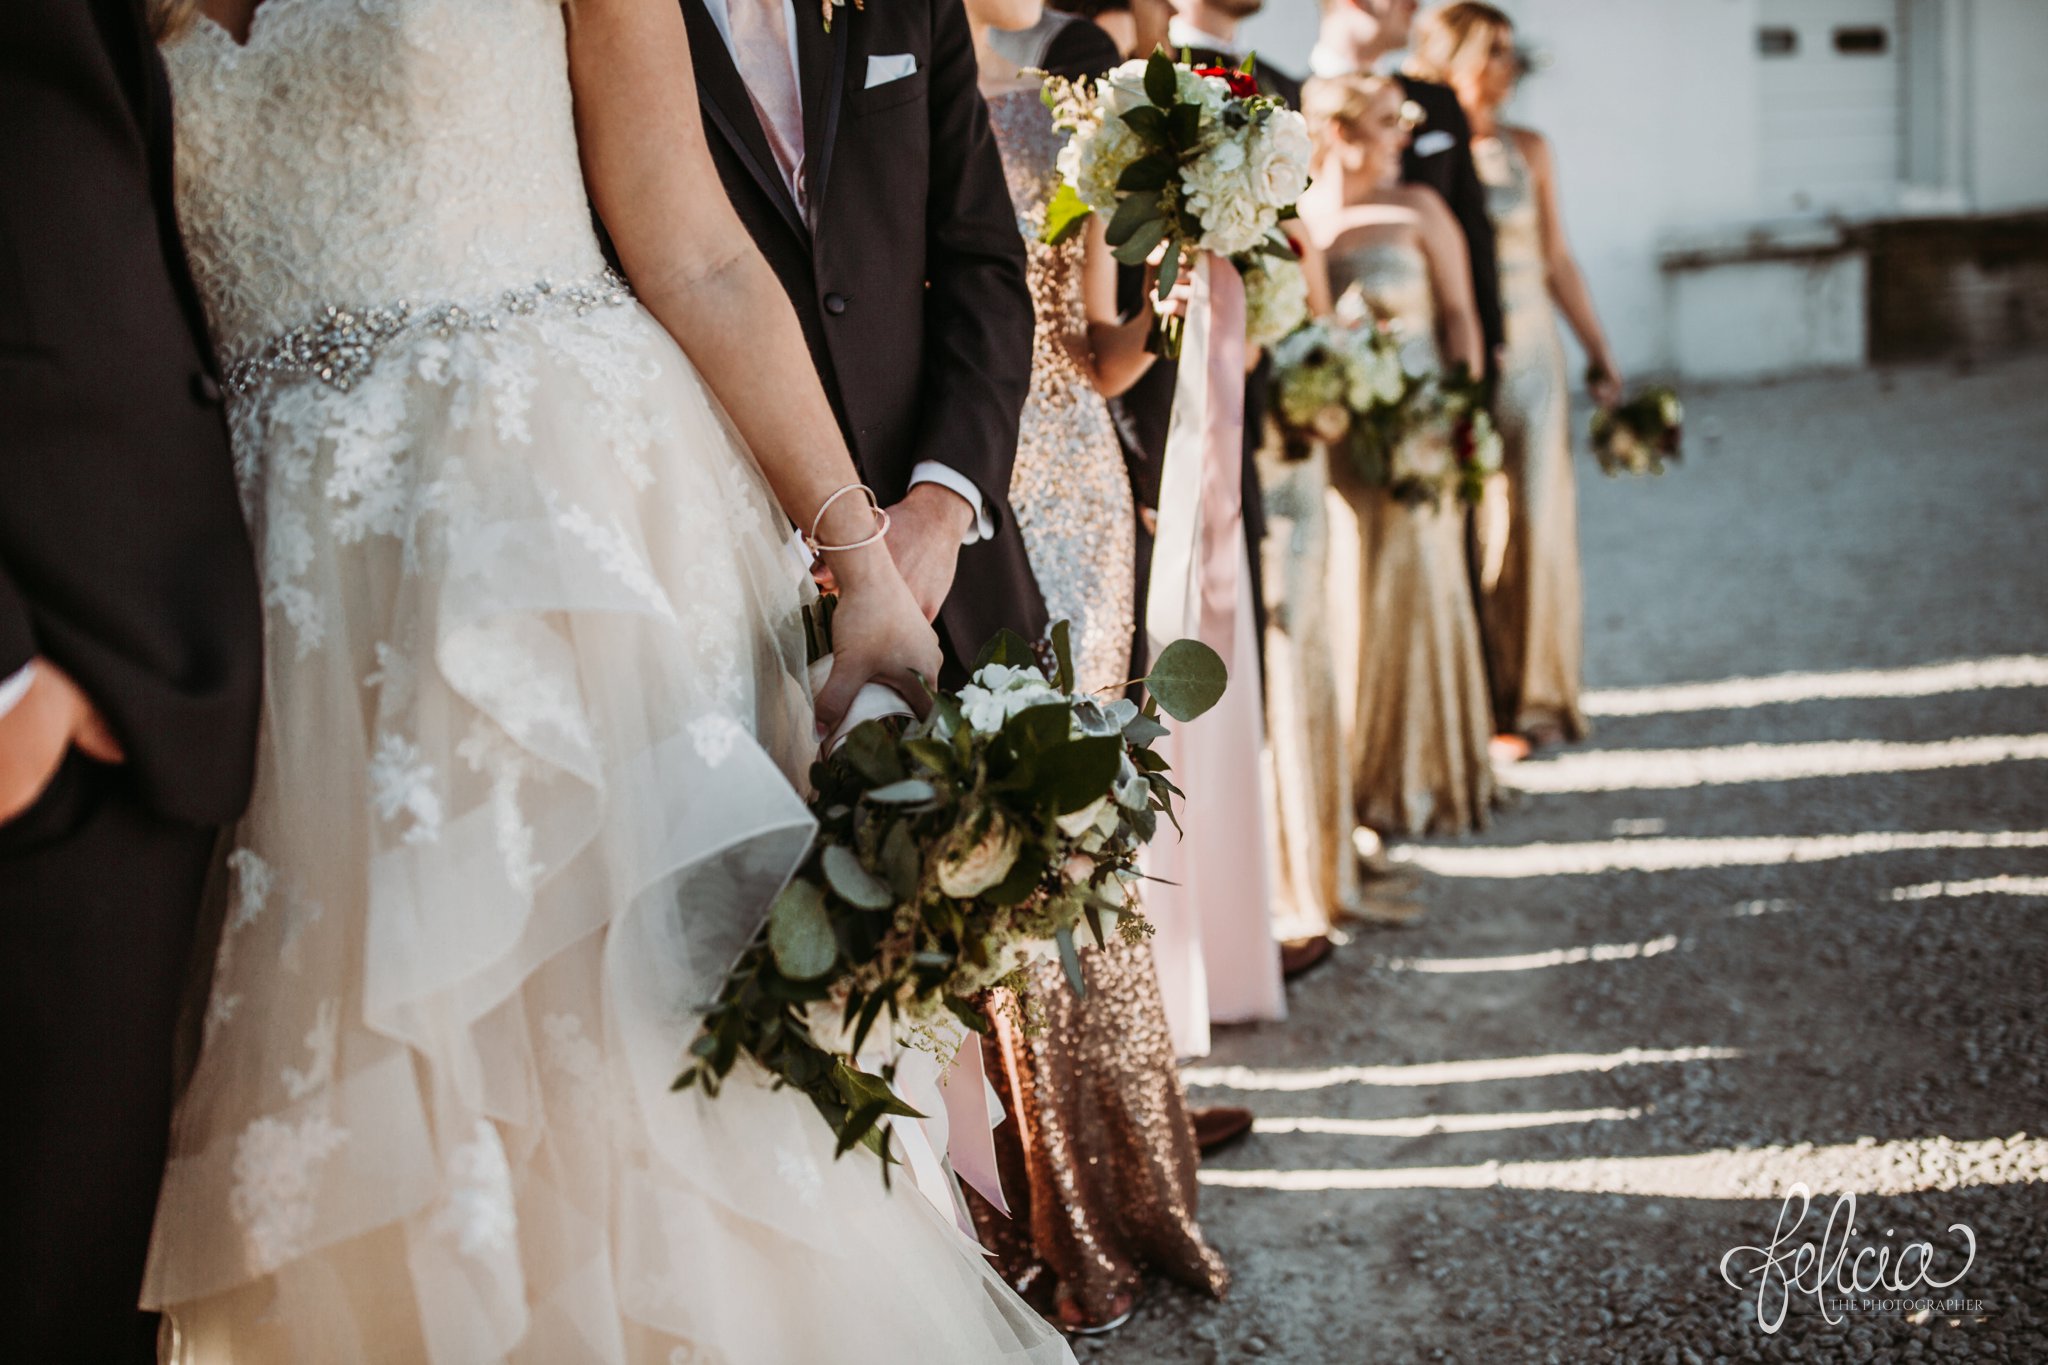 images by feliciathephotographer.com | wedding photographer | downtown kansas city | details | sparkles | sequins | bella bridesmaid | belle vogue | lace fitted bodice | long tule train | wild hill flowers | 